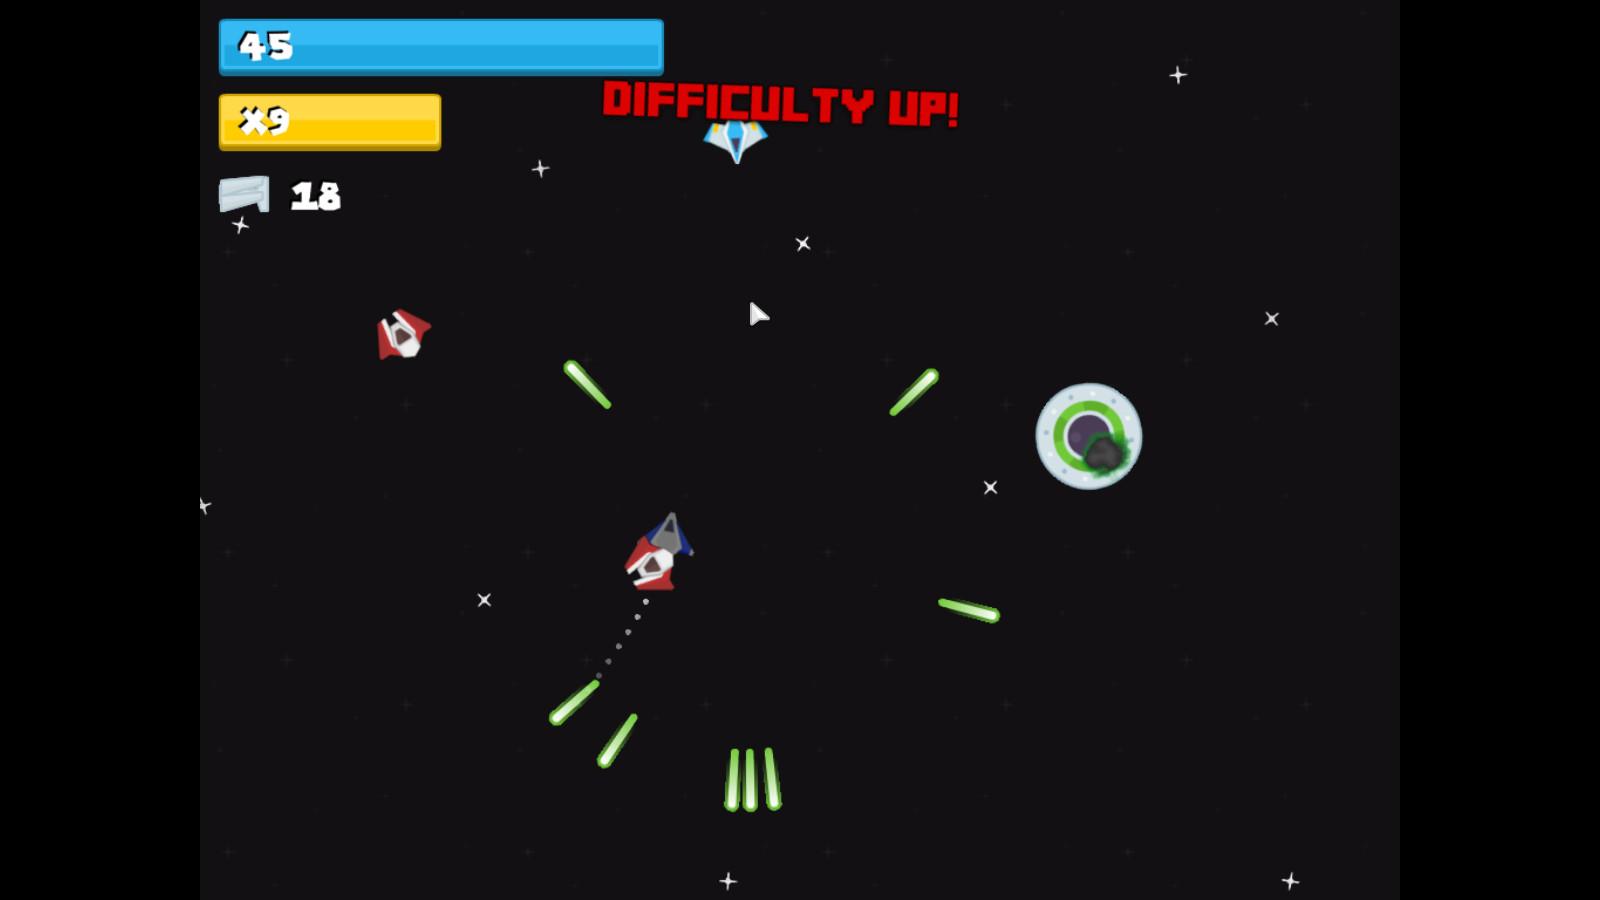 Screenshot №9 from game Gal-X-E